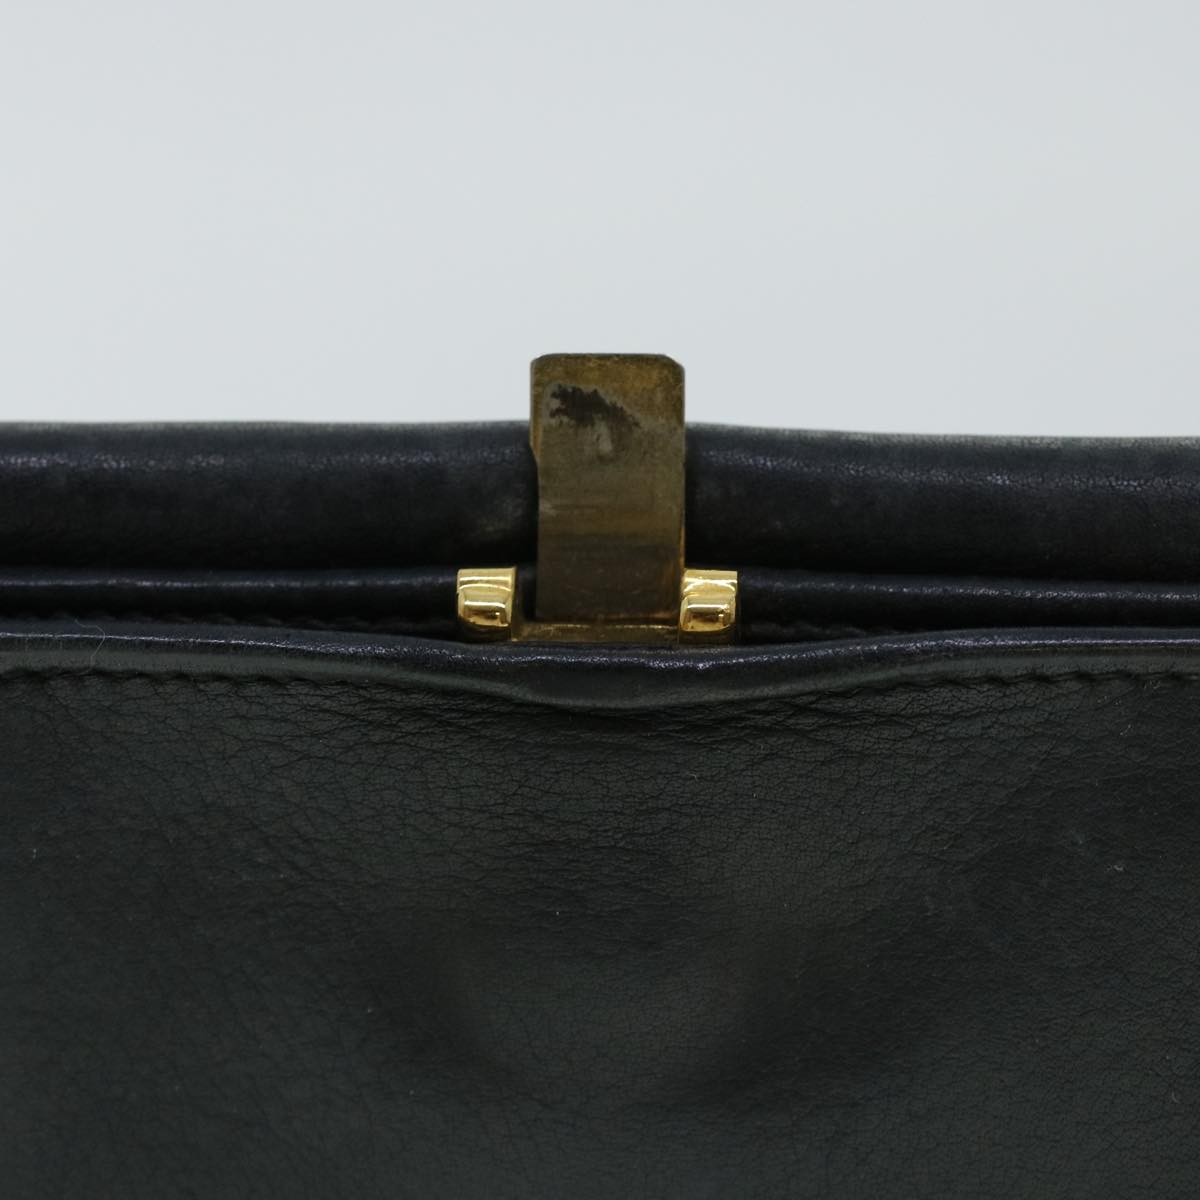 Salvatore Ferragamo Wallet Leather 3Set Black Auth bs5102